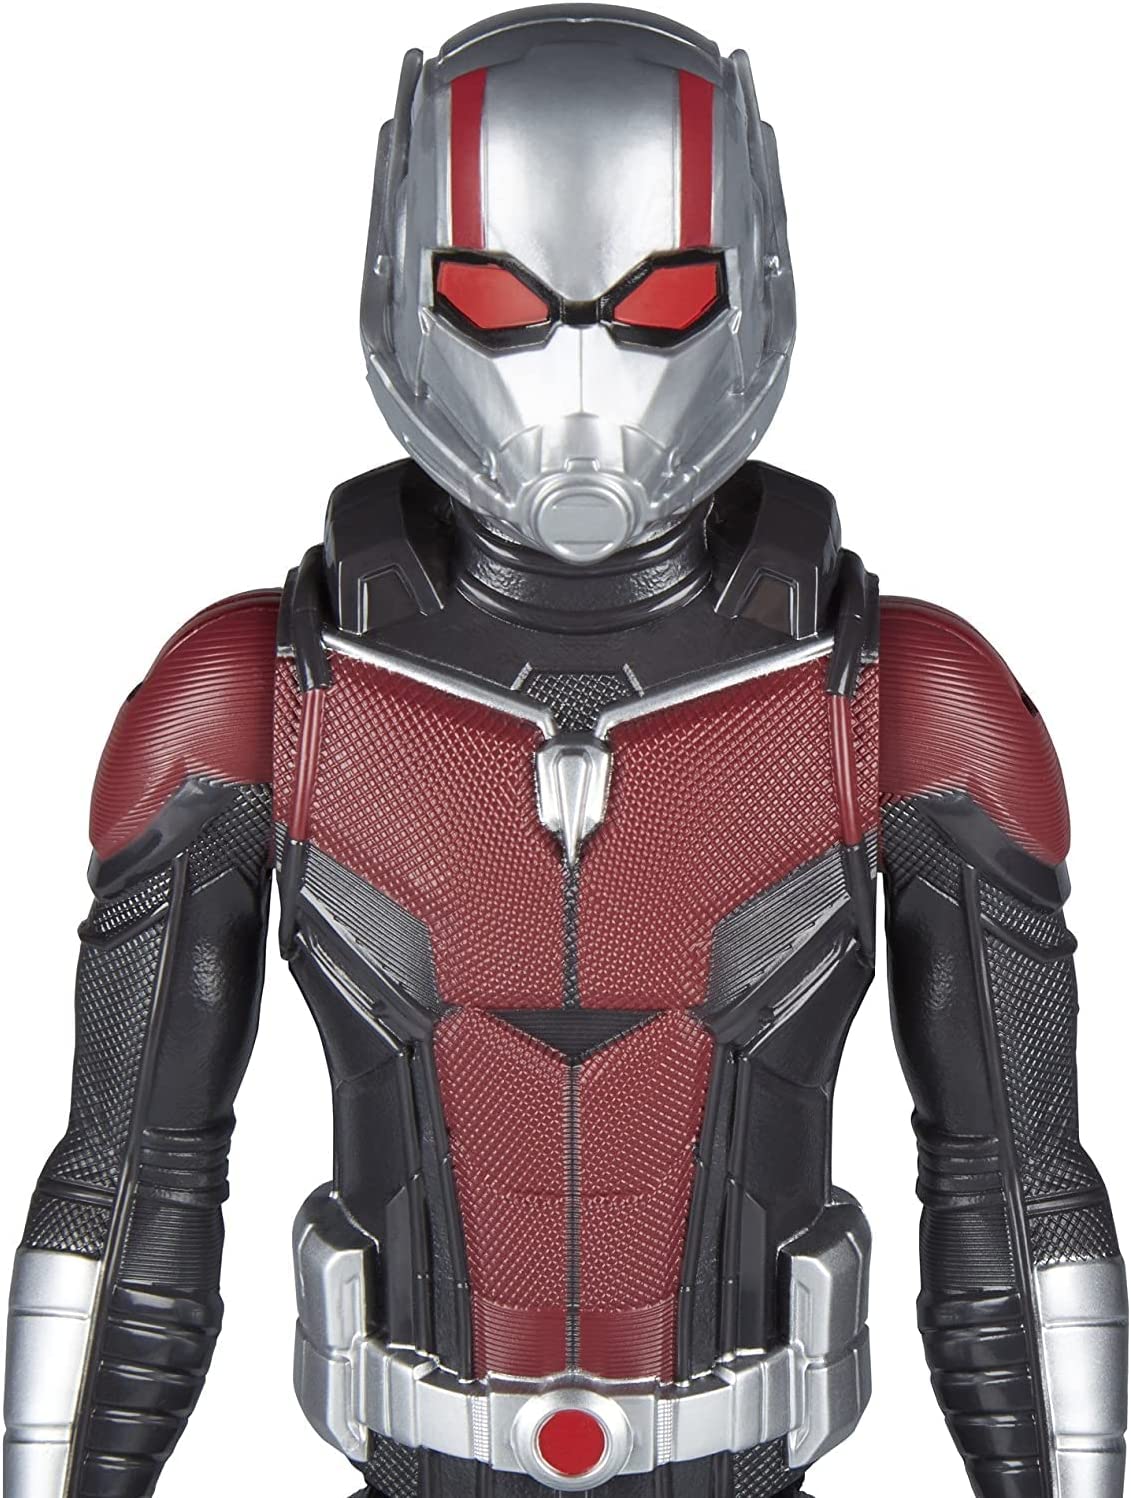 The Avengers Titan Hero Series Antman Action Figure